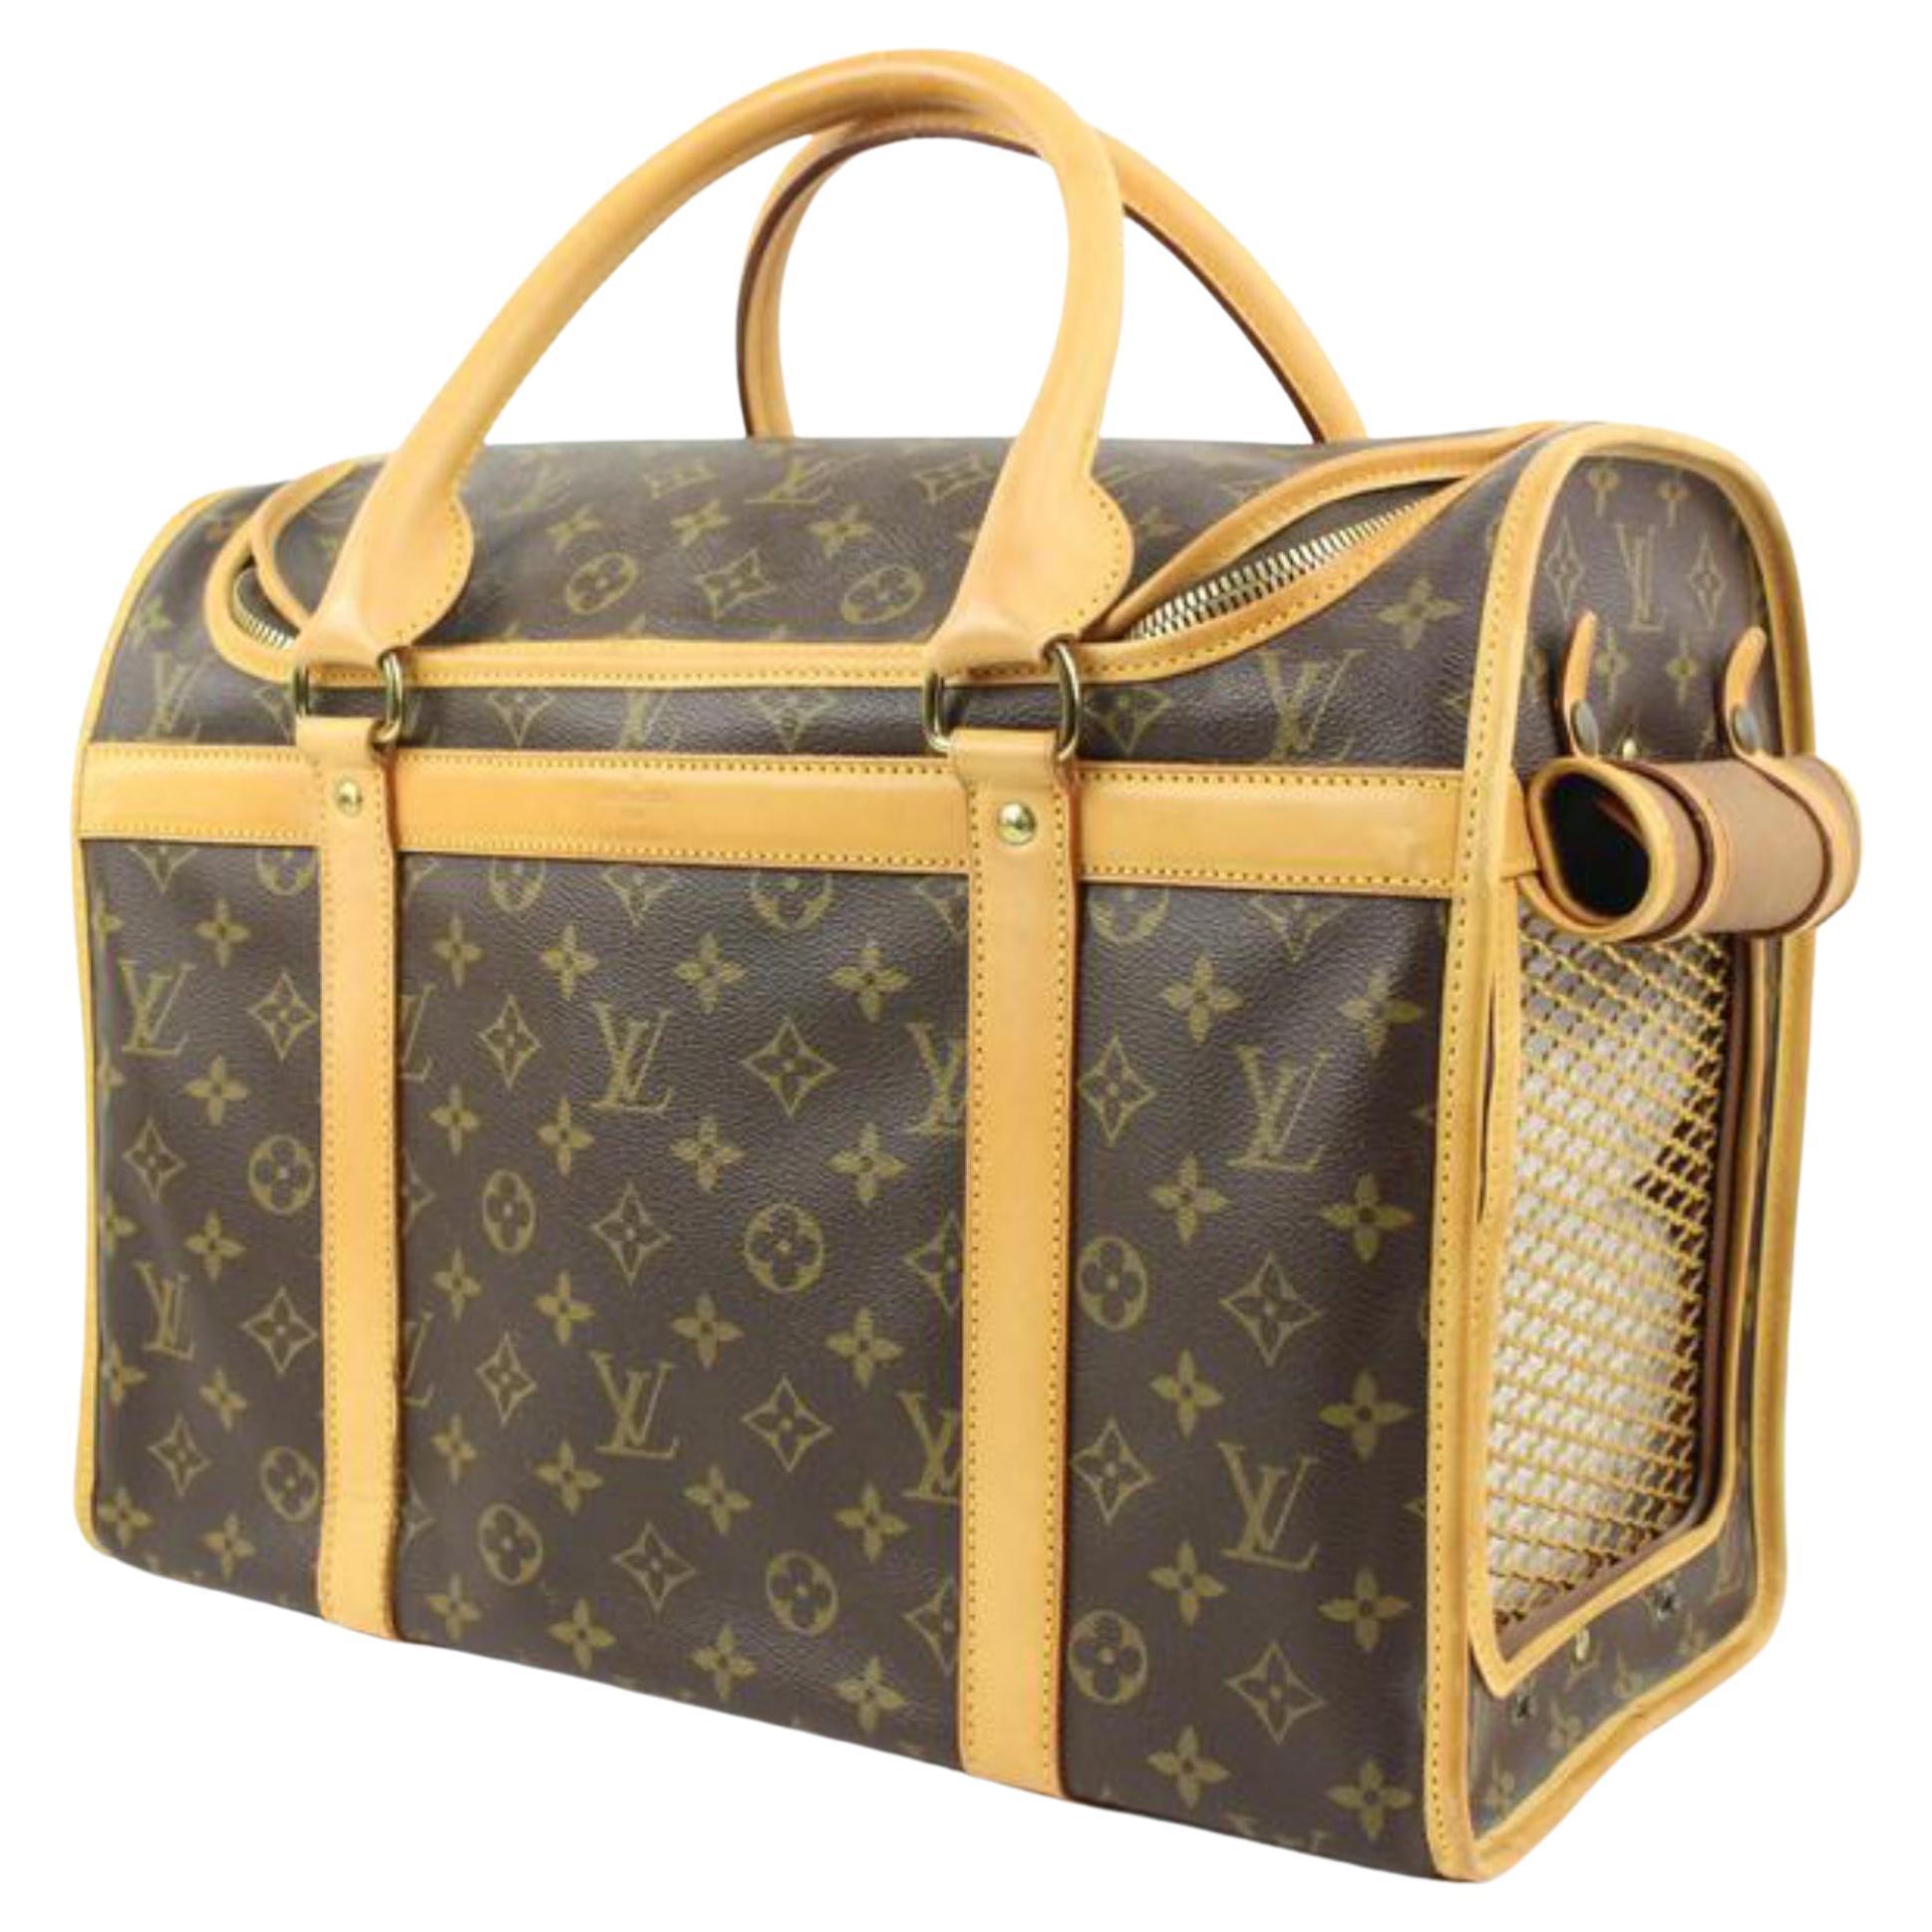 Louis Vuitton Monogram Pet Carrier 40 Sac Chien Dog Travel Bag 99lv215s